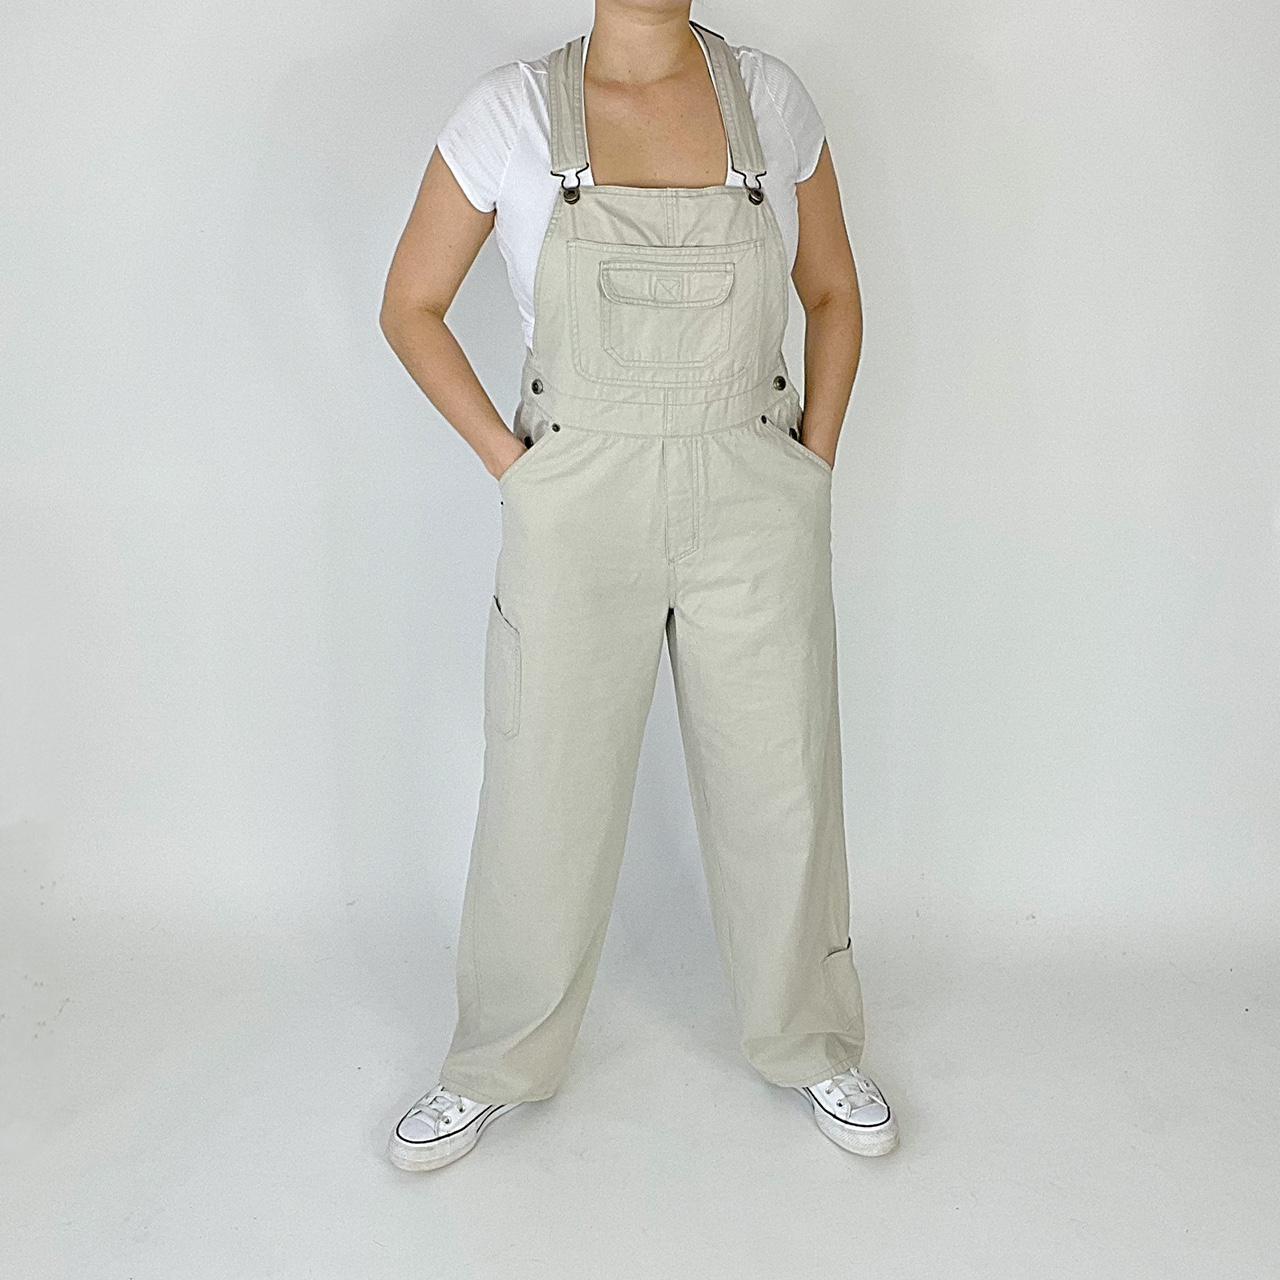 Product Image 1 - Vintage 90s khaki overalls! 
Cute